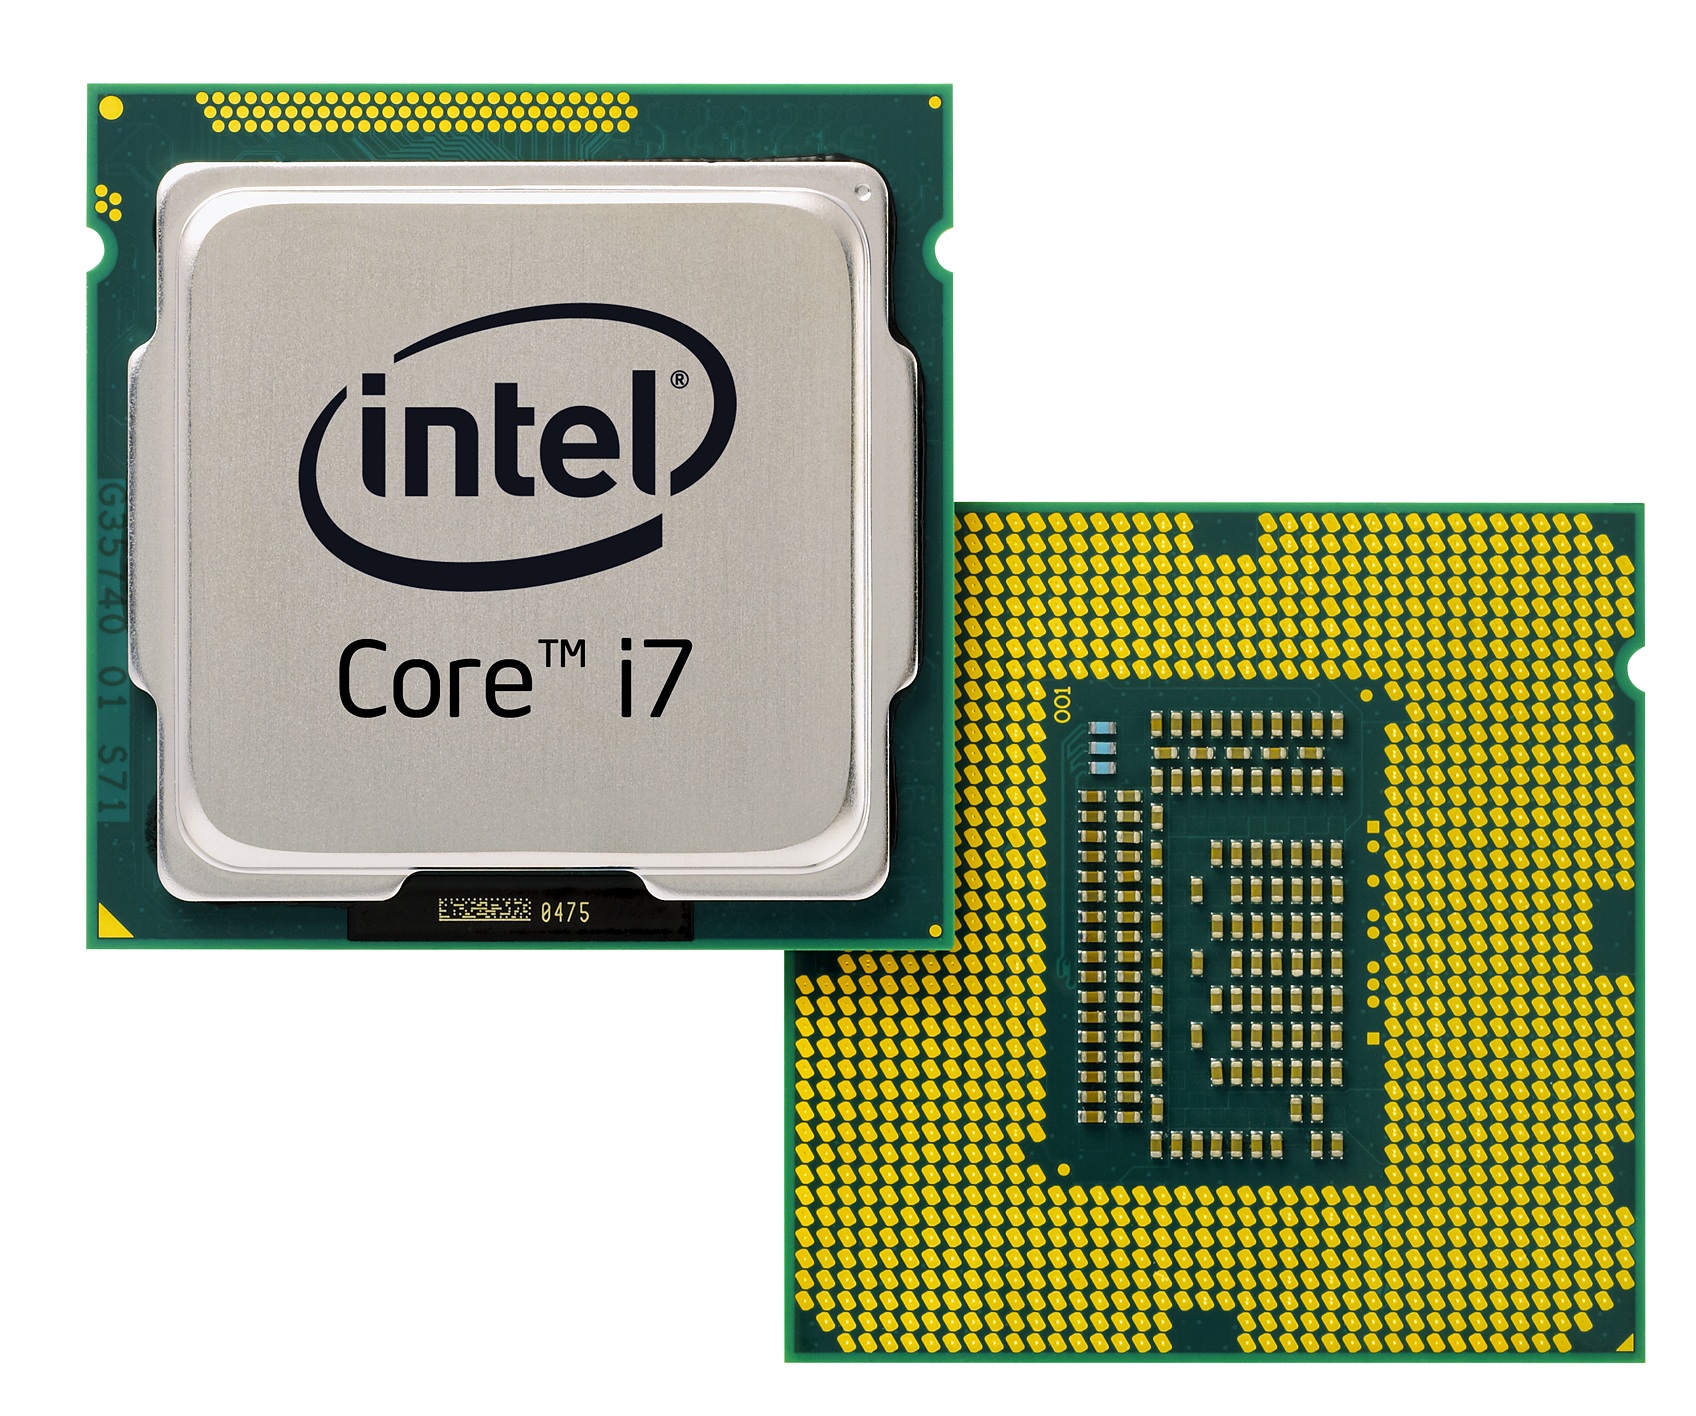 Media asset in full size related to 3dfxzone.it news item entitled as follows: Intel annuncia i processori Core di terza generazione Ivy Bridge | Image Name: news17086_2.jpg